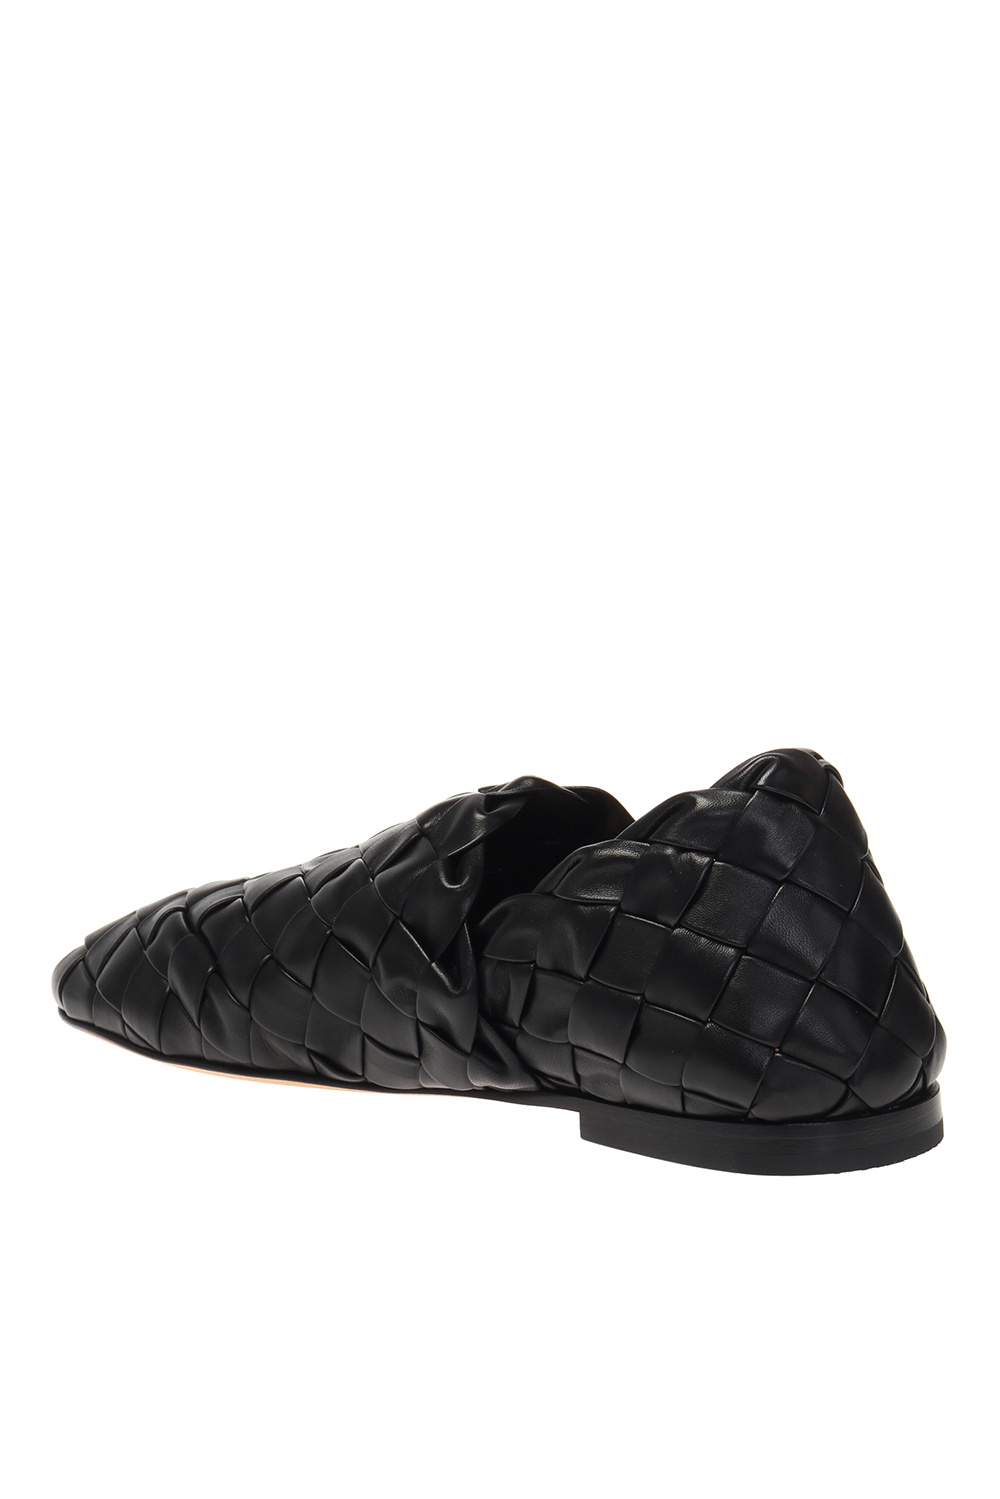 Bottega Veneta Leather loafers